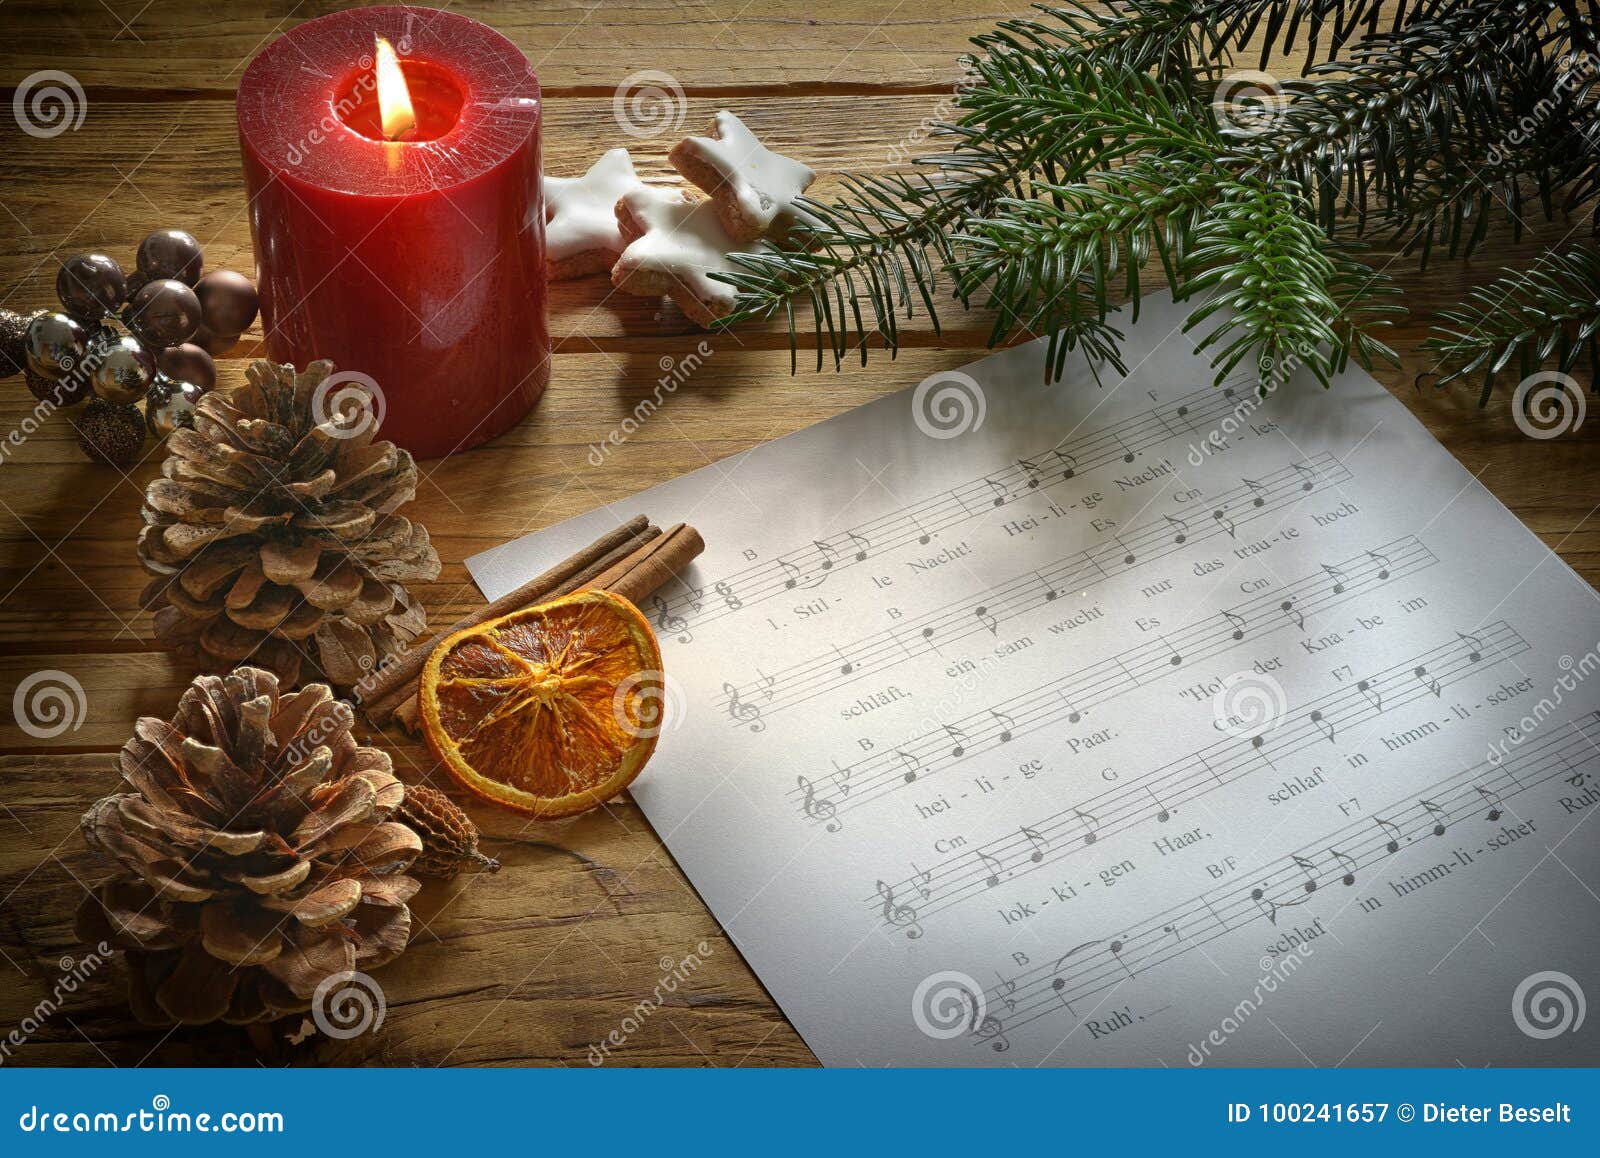 christmas song with deko